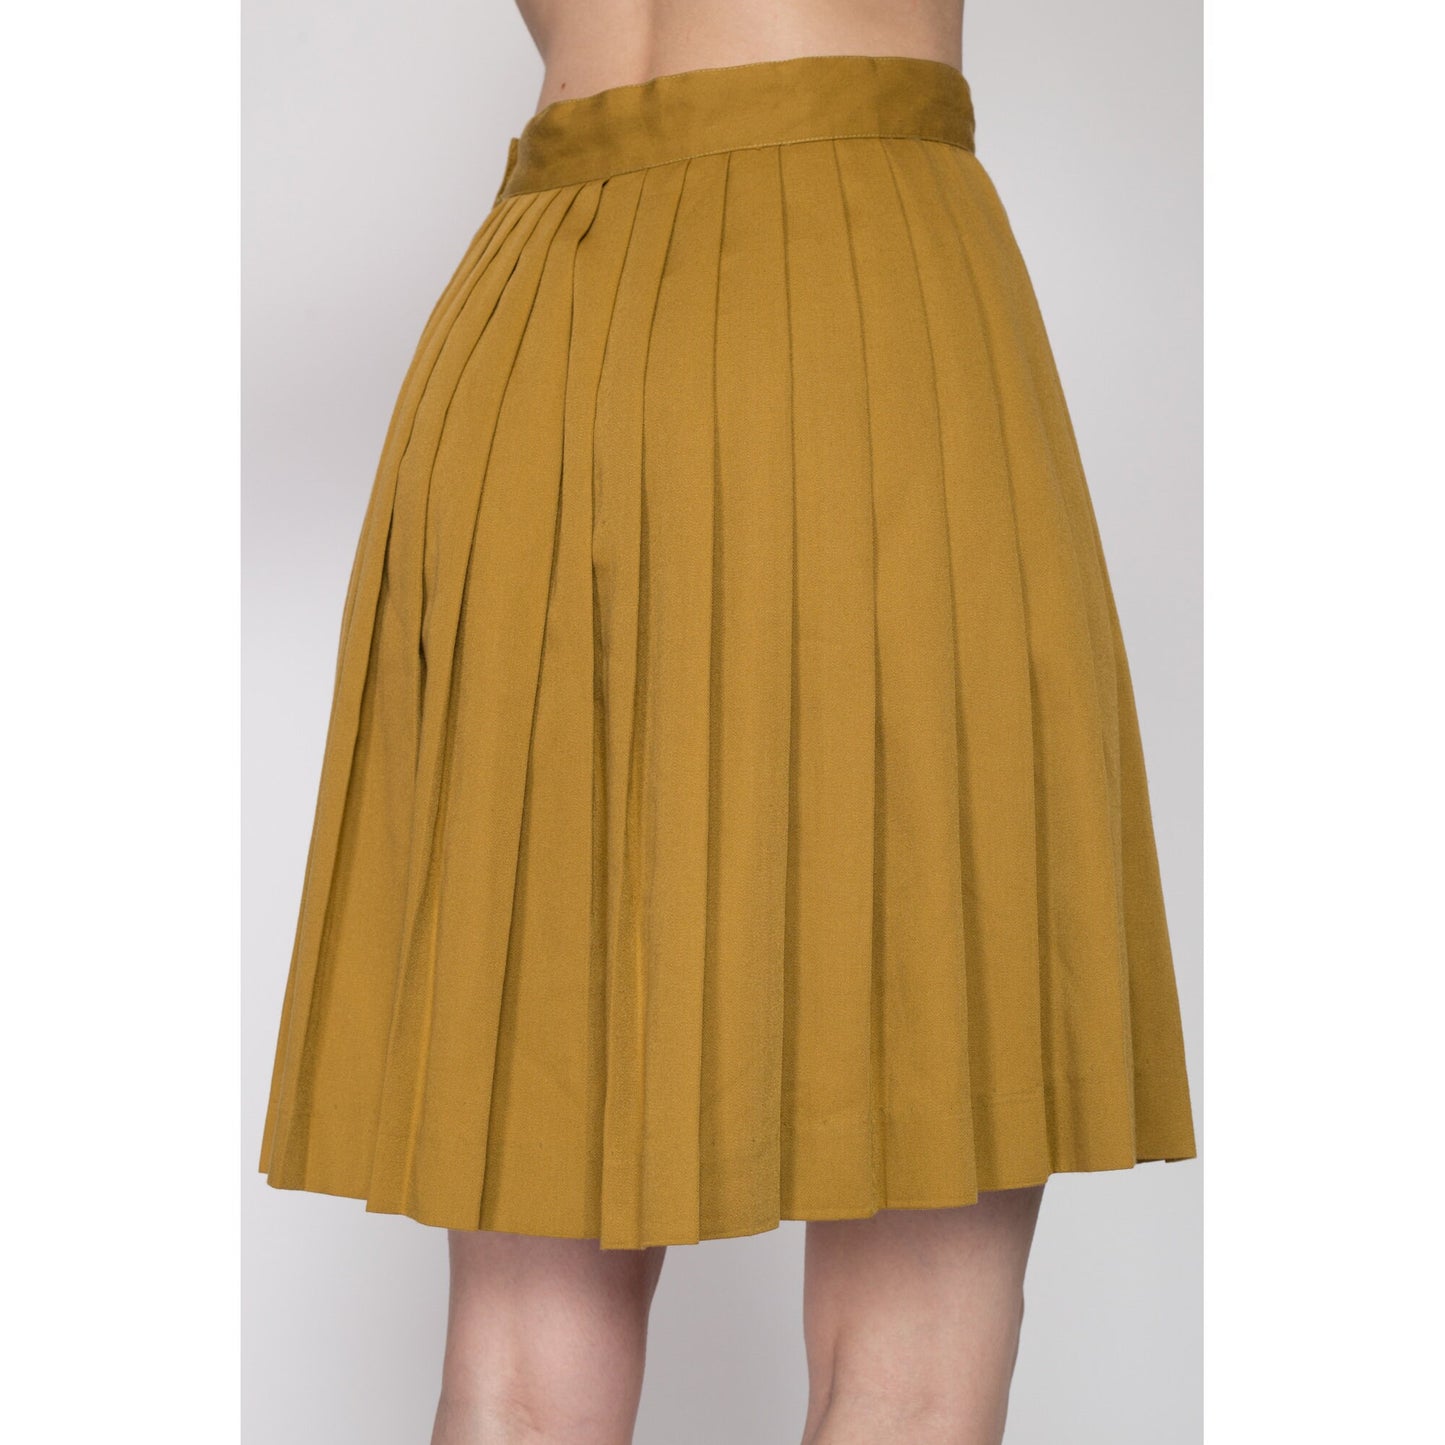 Small 80s Mustard Yellow Pleated Mini Skirt 25.5" | Vintage High Waisted Rayon Schoolgirl Skirt